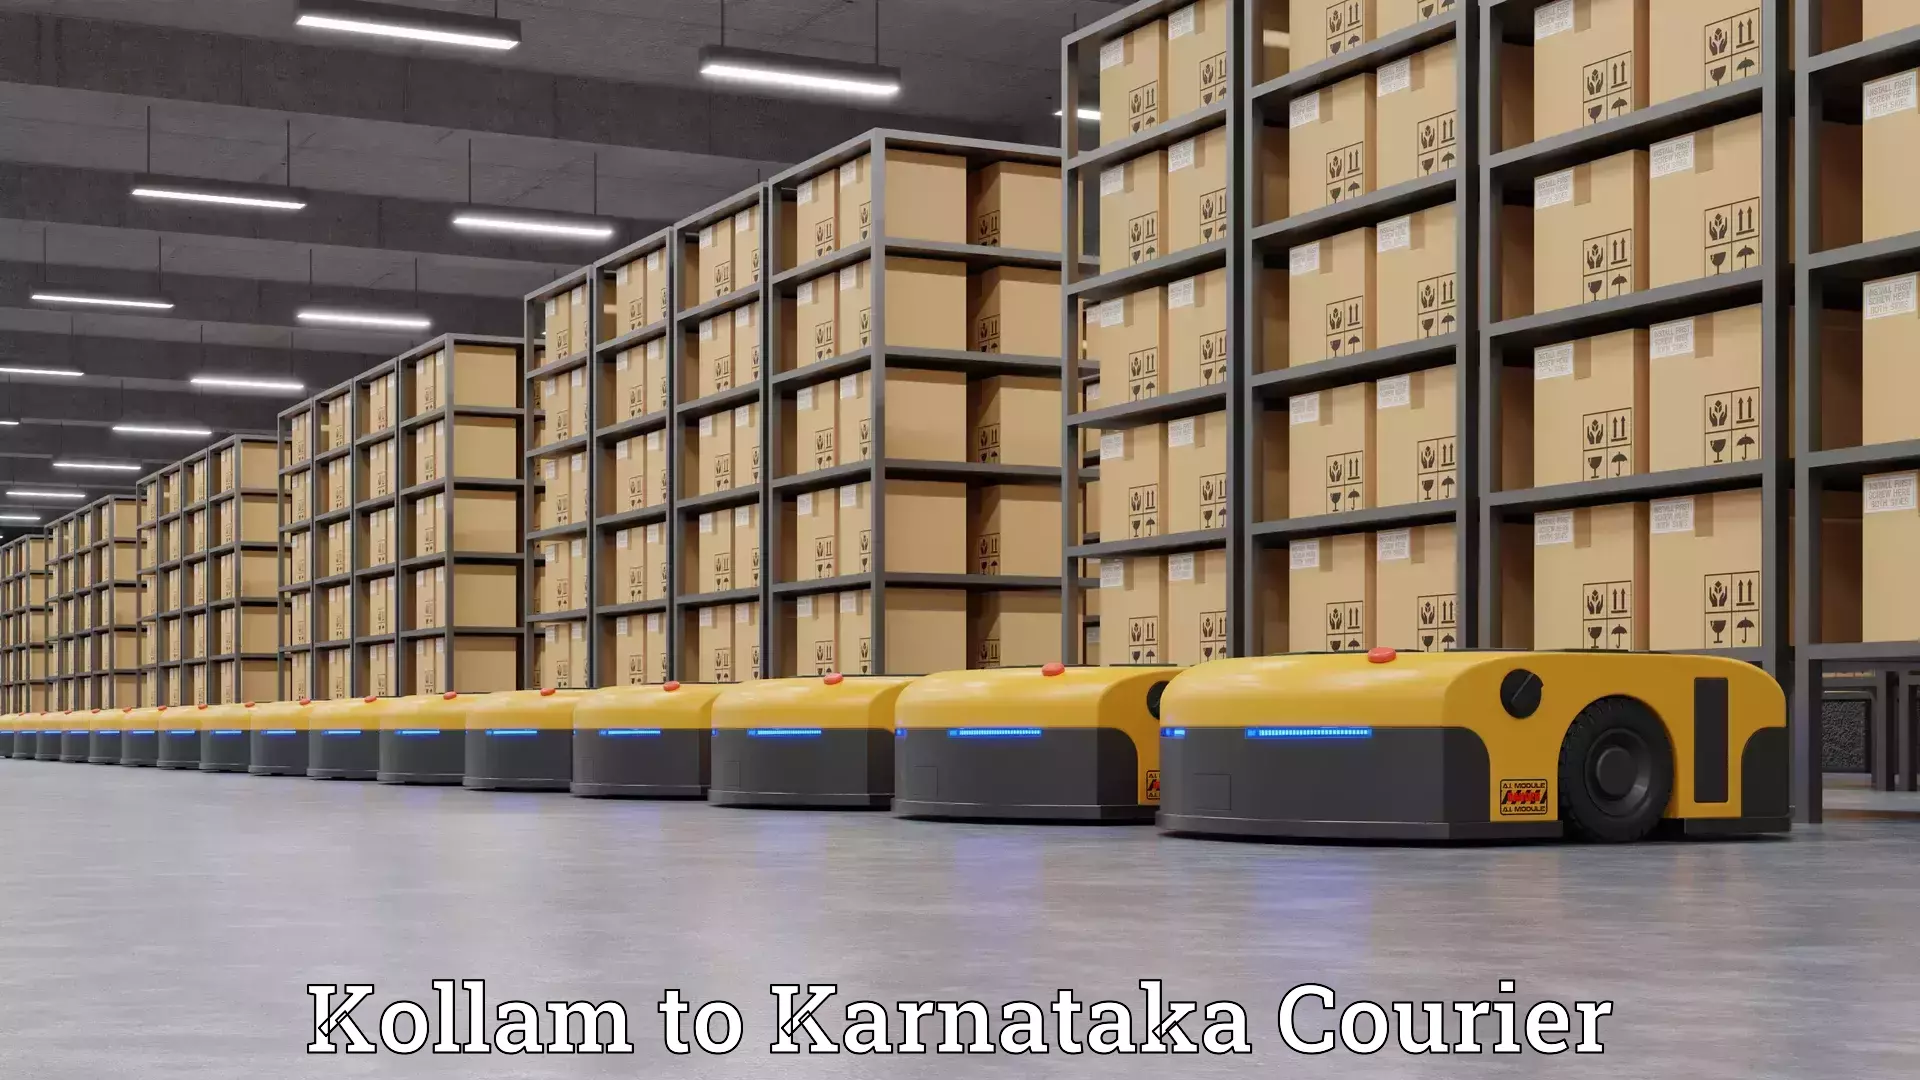 Professional moving company Kollam to Karnataka